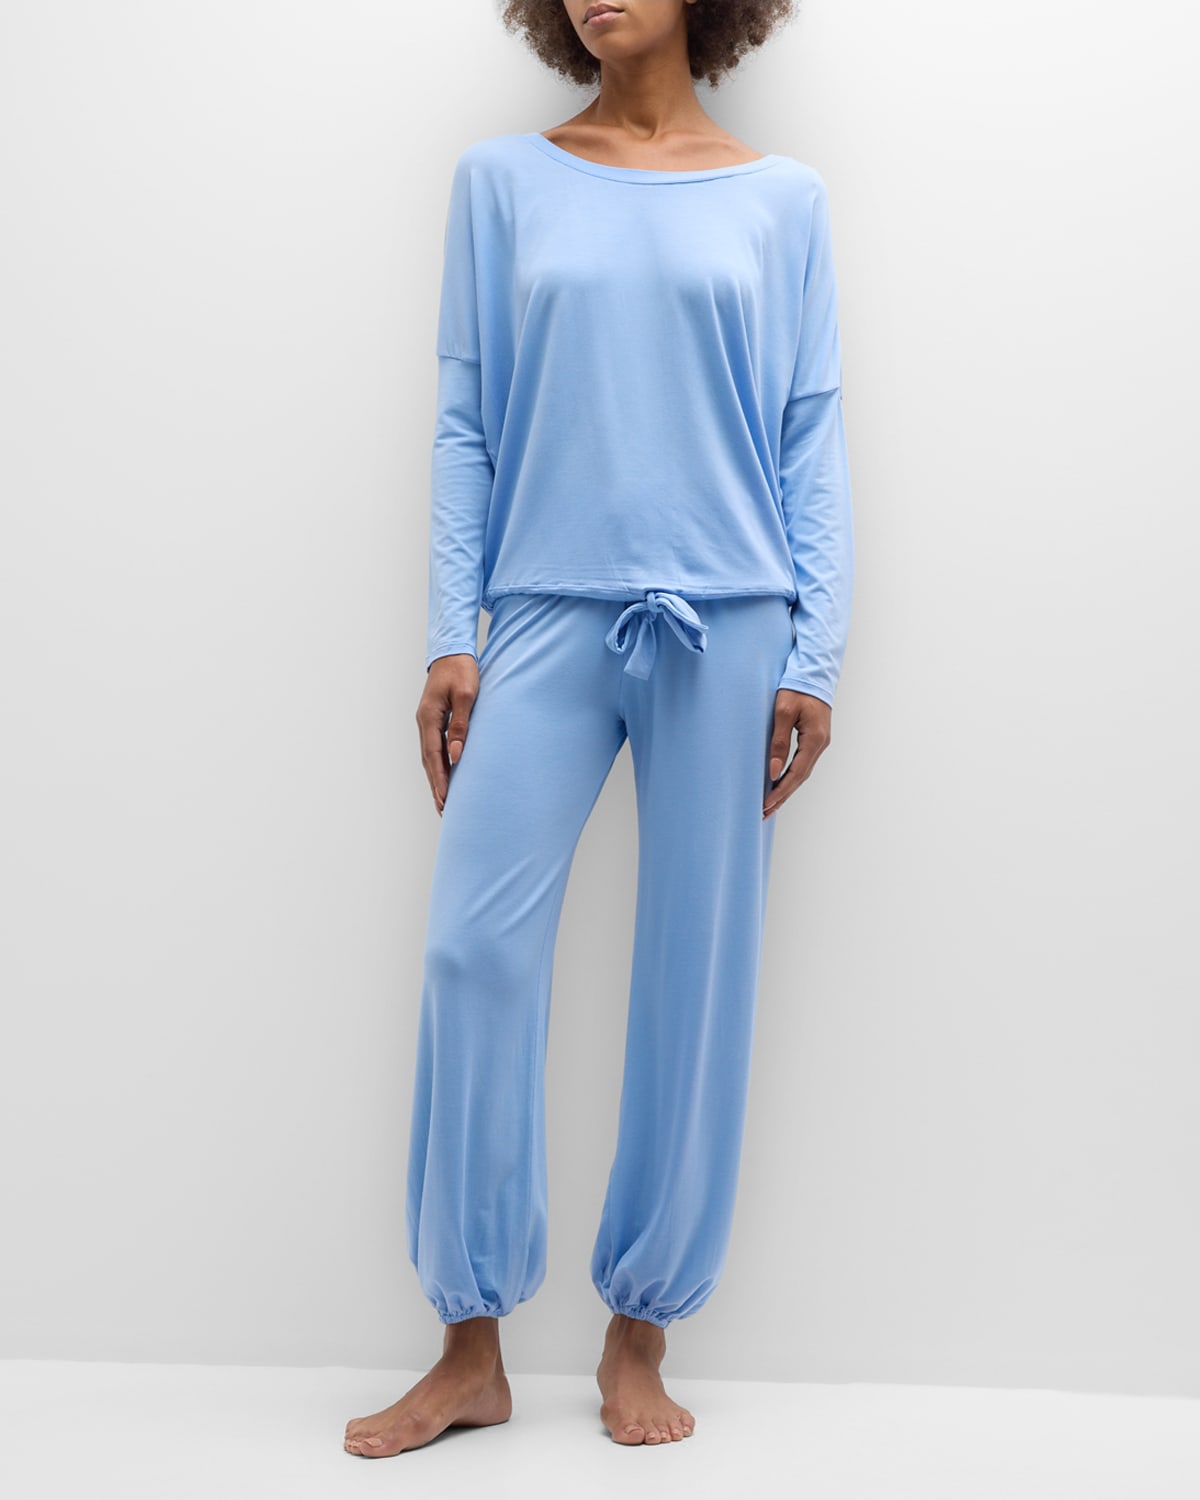 Eberjey Gisele Slouchy Pajama Set In Vista Blue